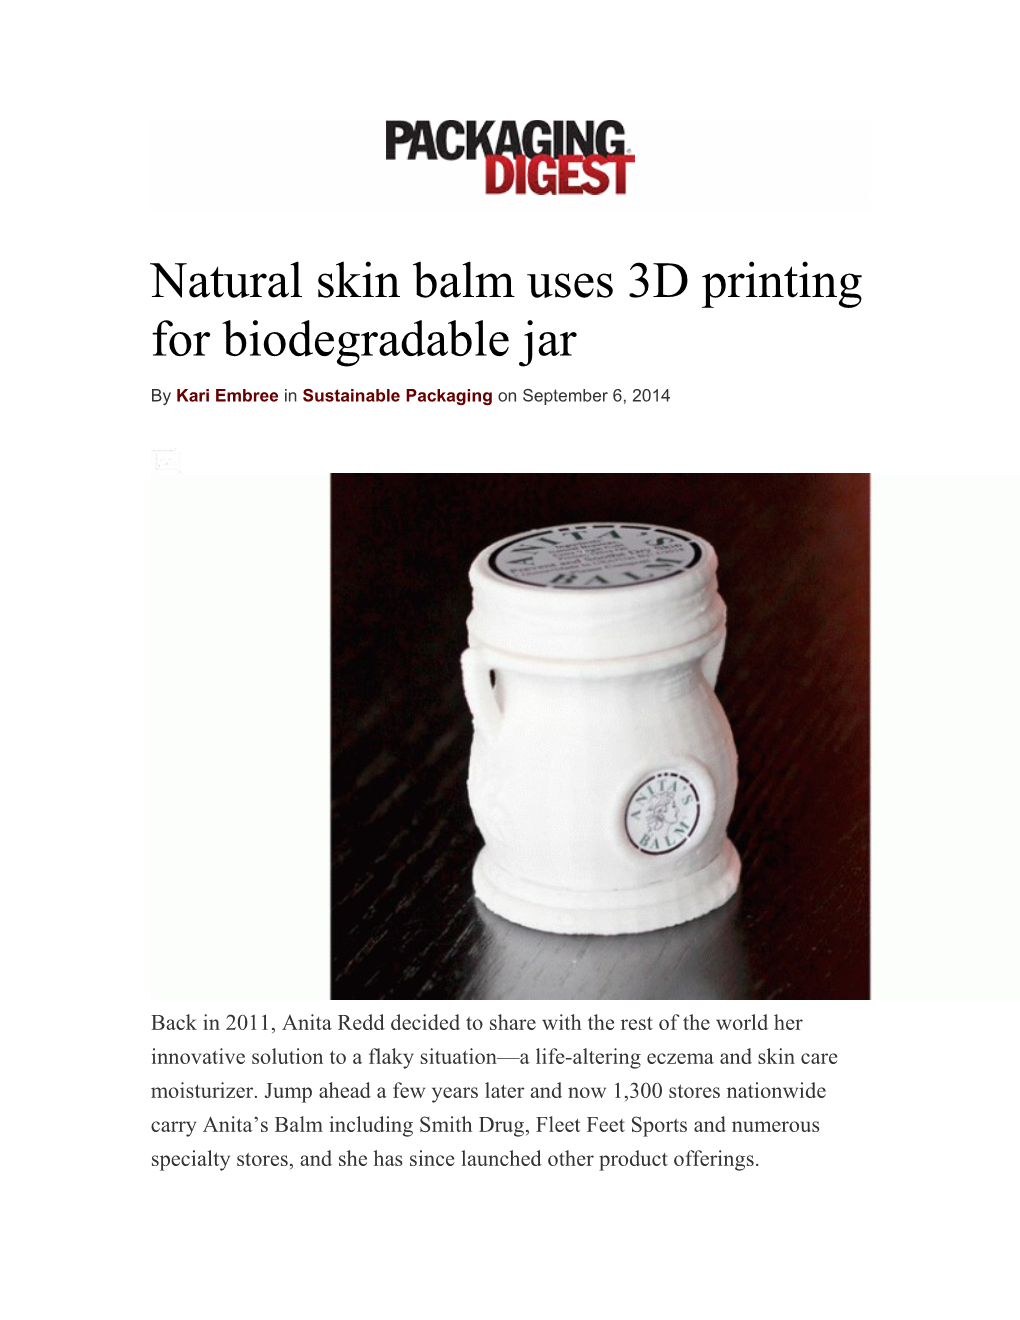 Natural Skin Balm Uses 3D Printing for Biodegradable Jar